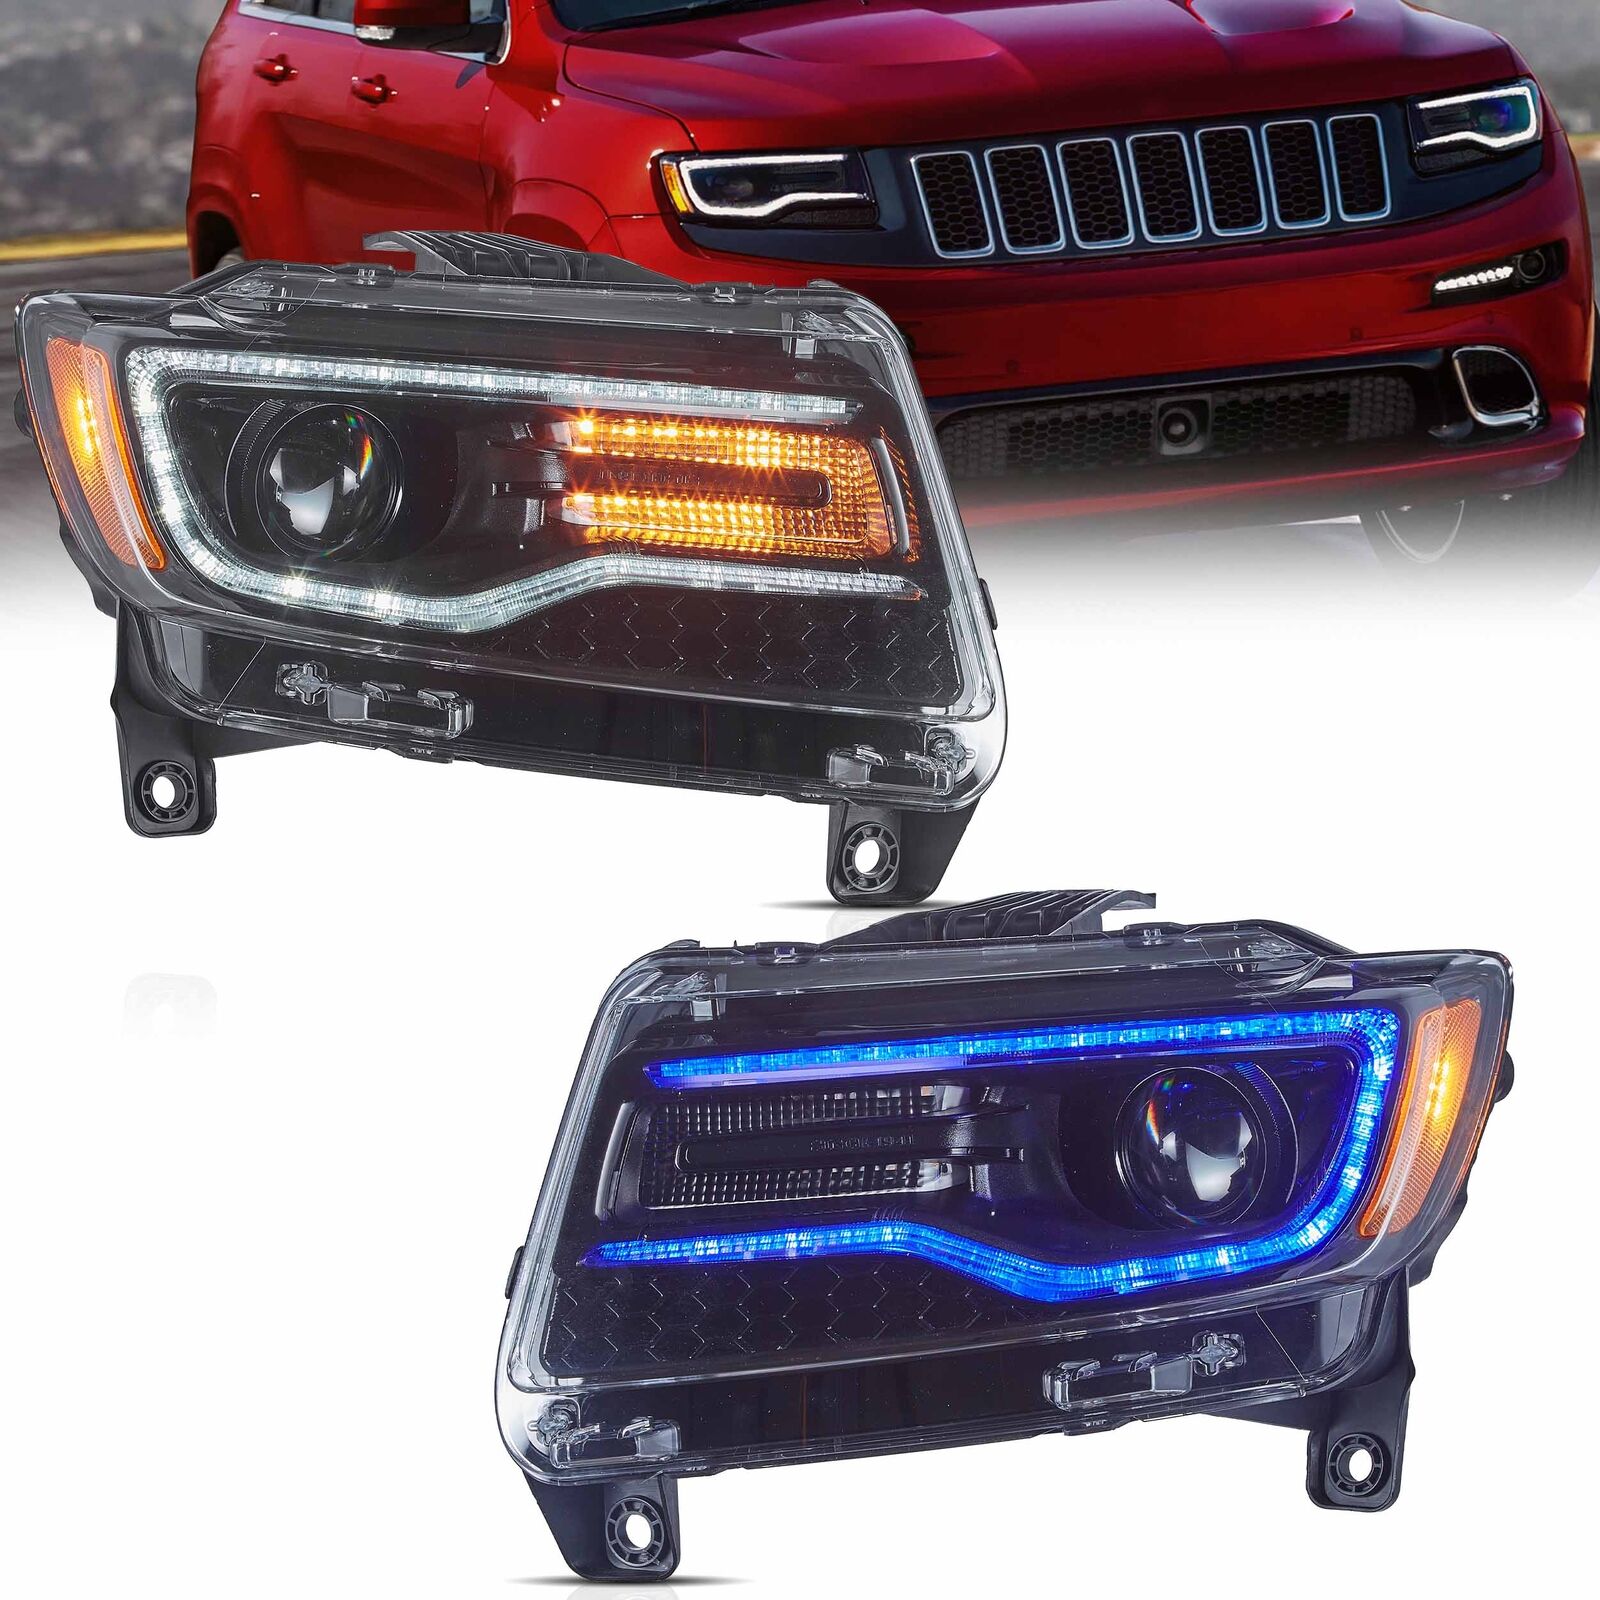 VLAND Full LED Headlights For 2011-2013 Jeep Grand Cherokee W/Blue Animation Set